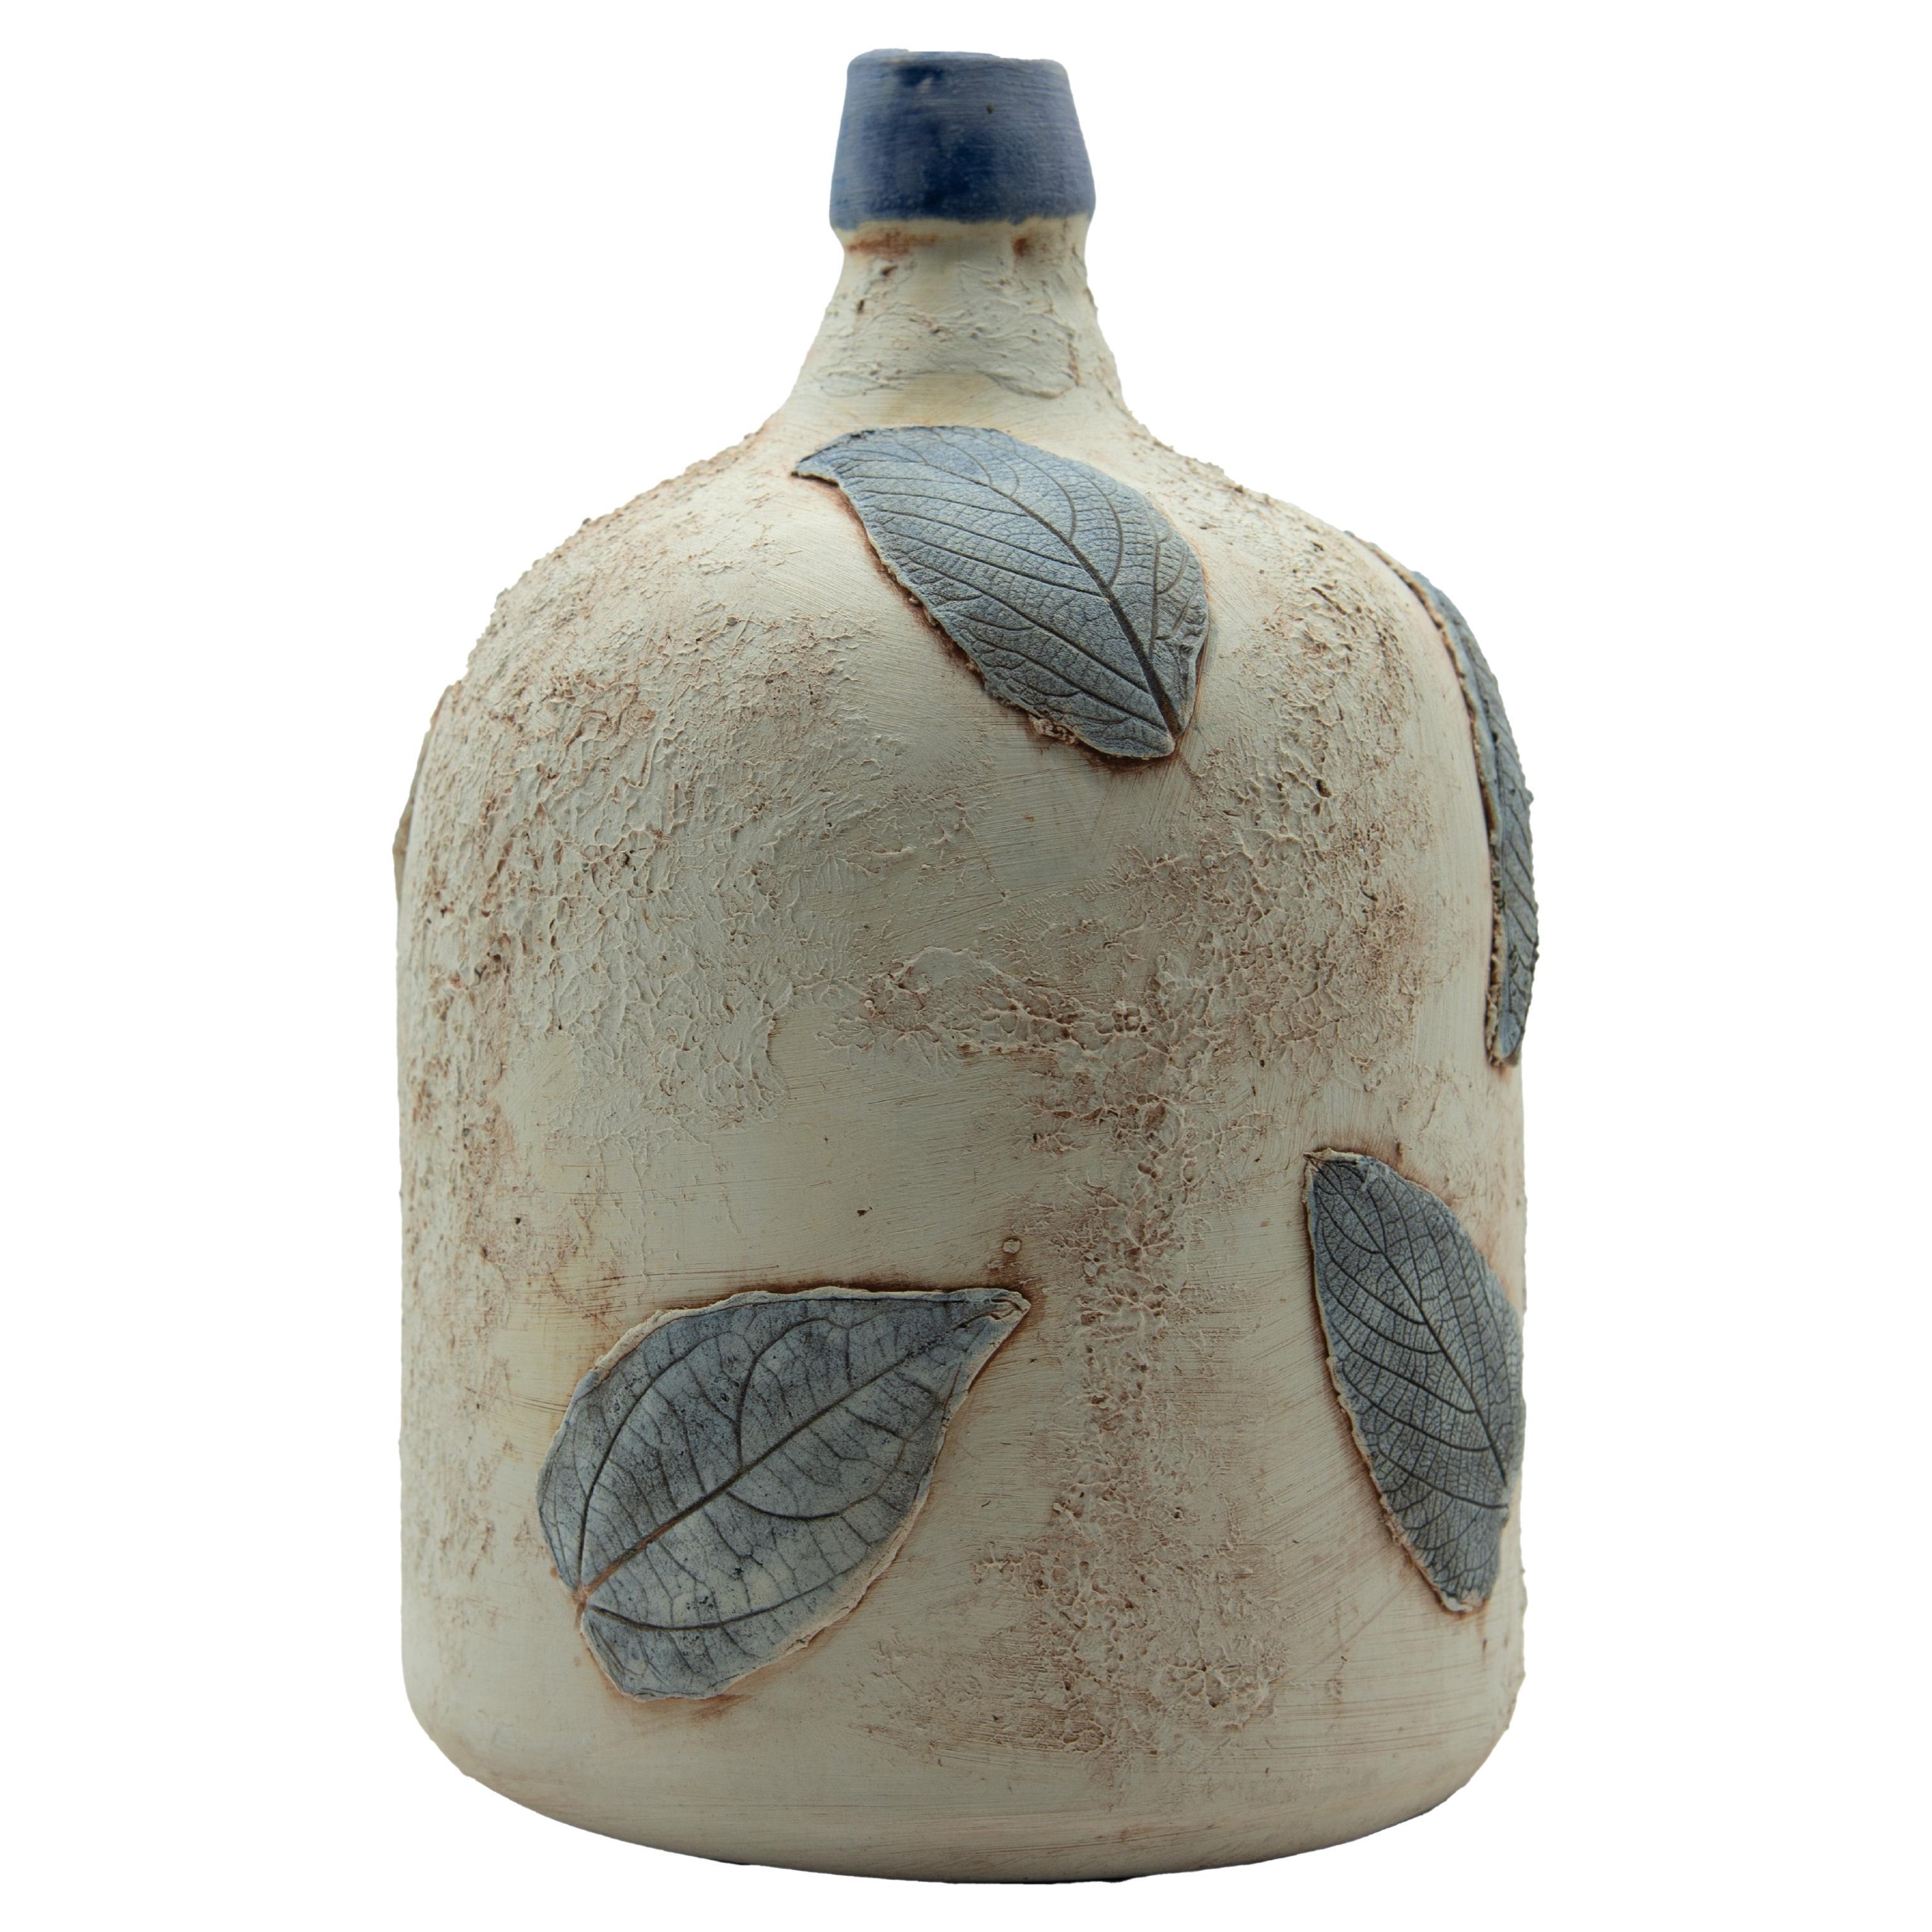 Handmade Mezcal Vessel Clay with Leaf Prints Fossil Like Ceramic Organic Modern For Sale